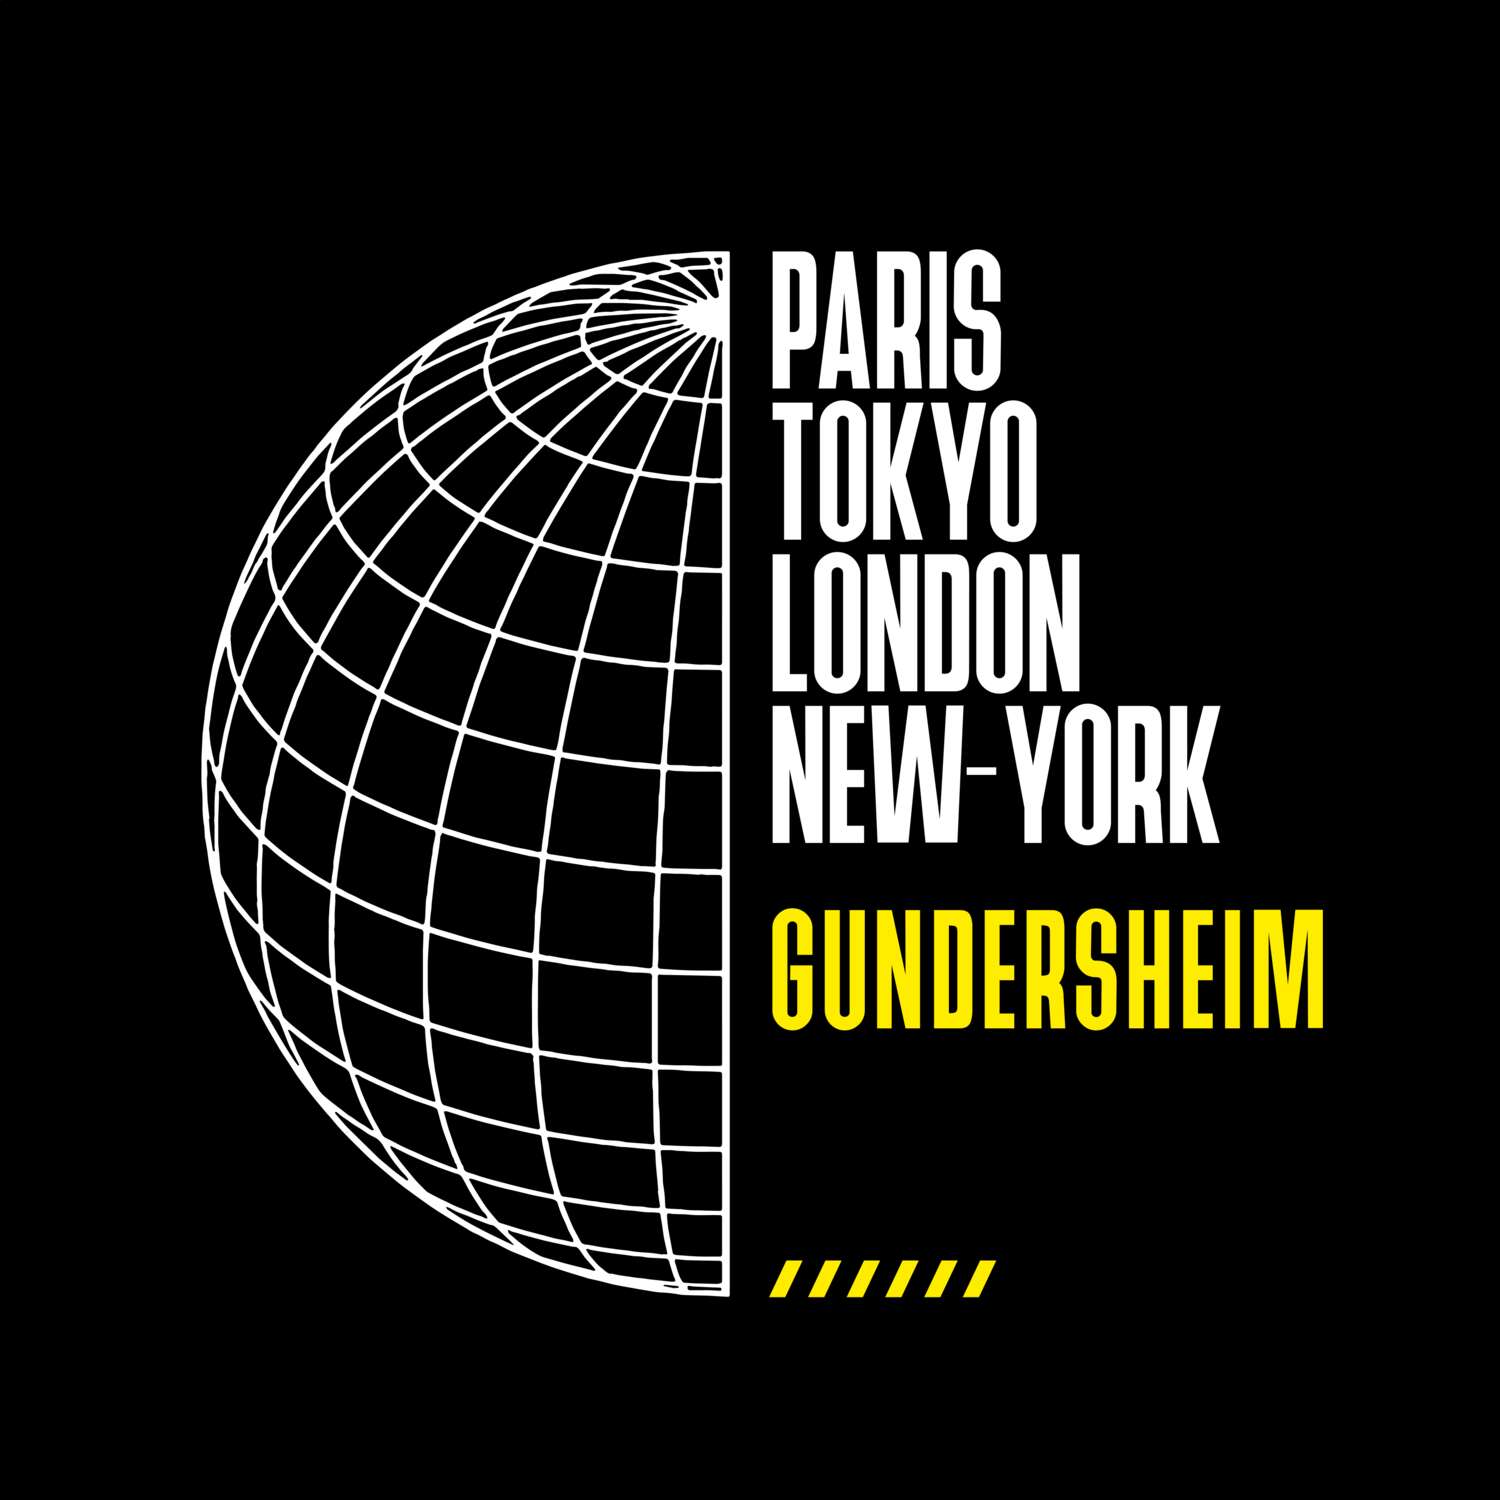 Gundersheim T-Shirt »Paris Tokyo London«